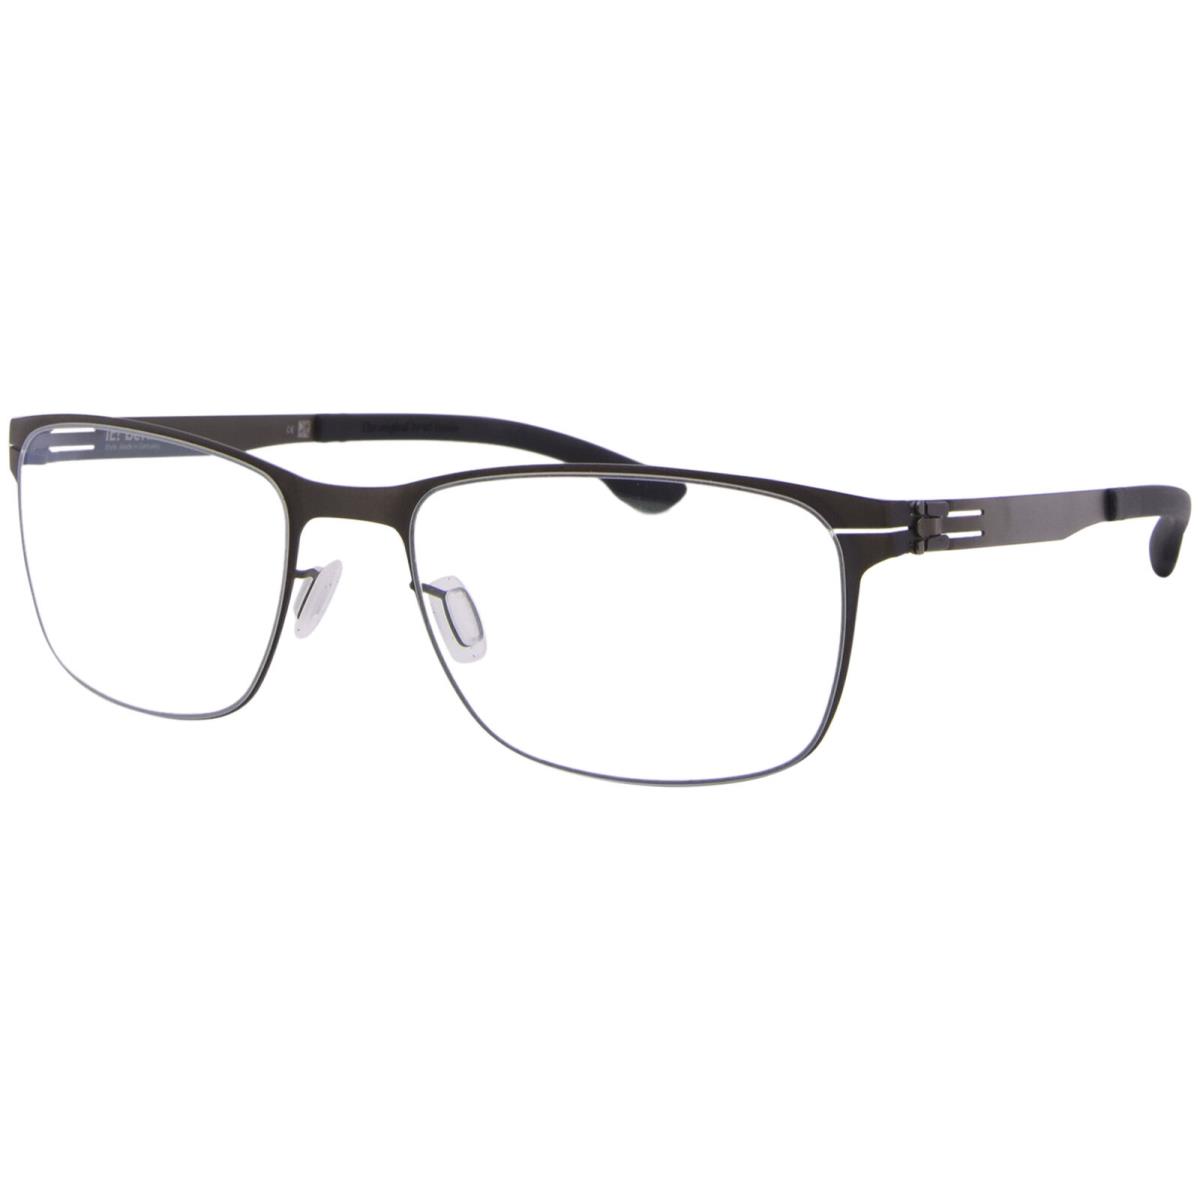 Ic Berlin Dennis-n-large Eyeglasses Graphite/black Full Rim Square Shape 56mm